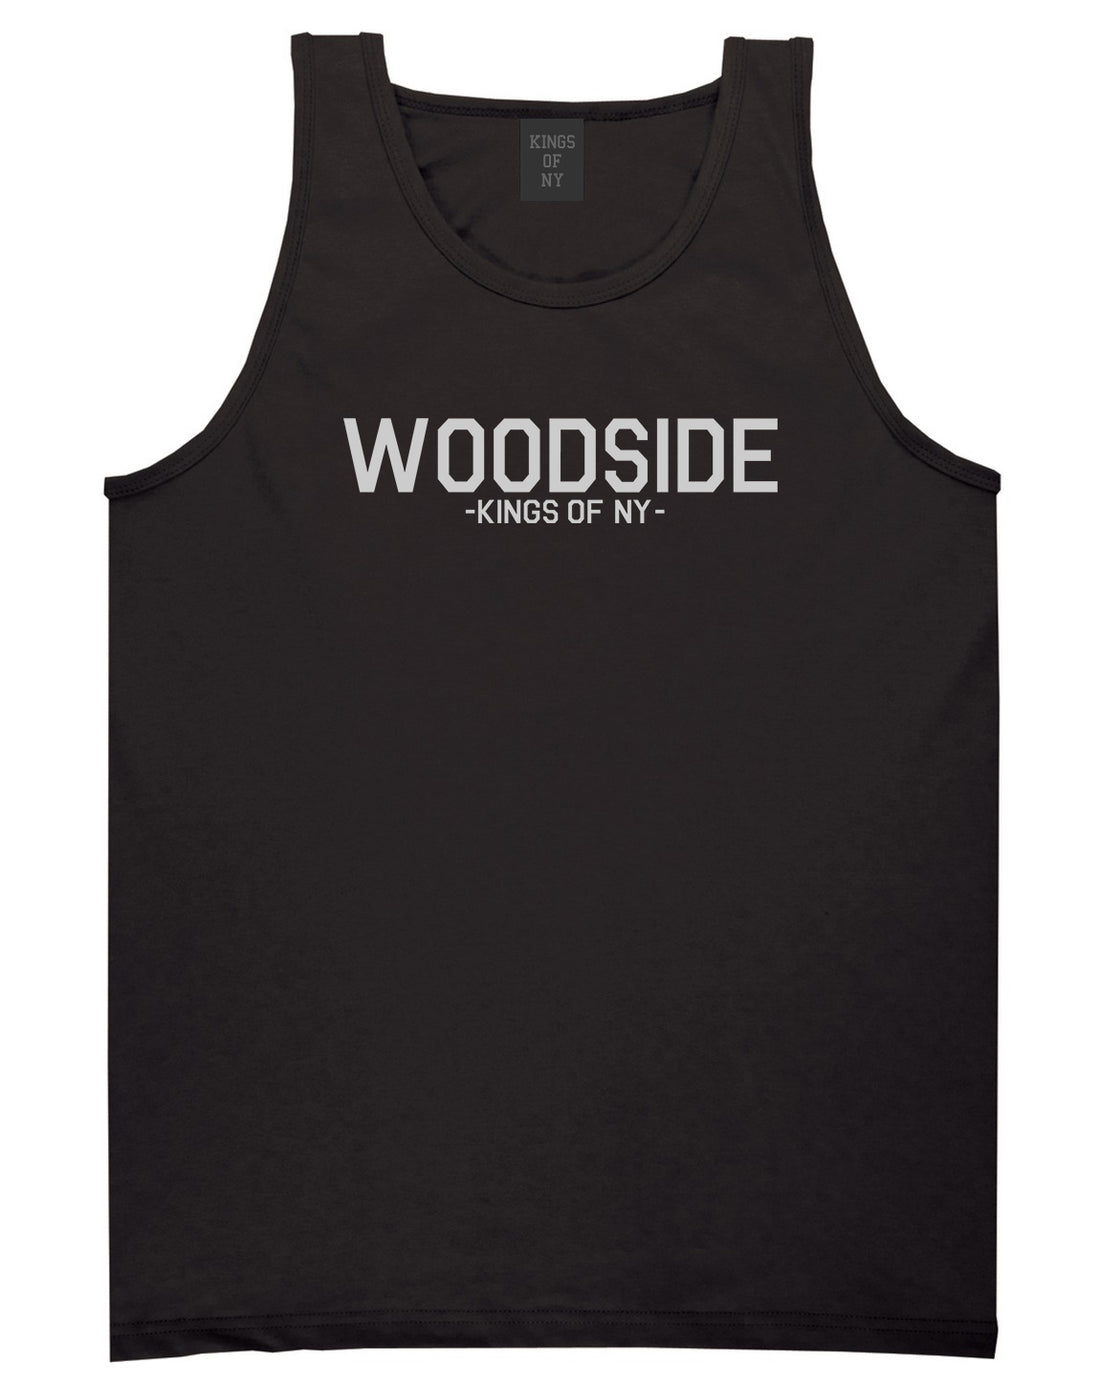 Woodside Queens New York Mens Tank Top Shirt Black